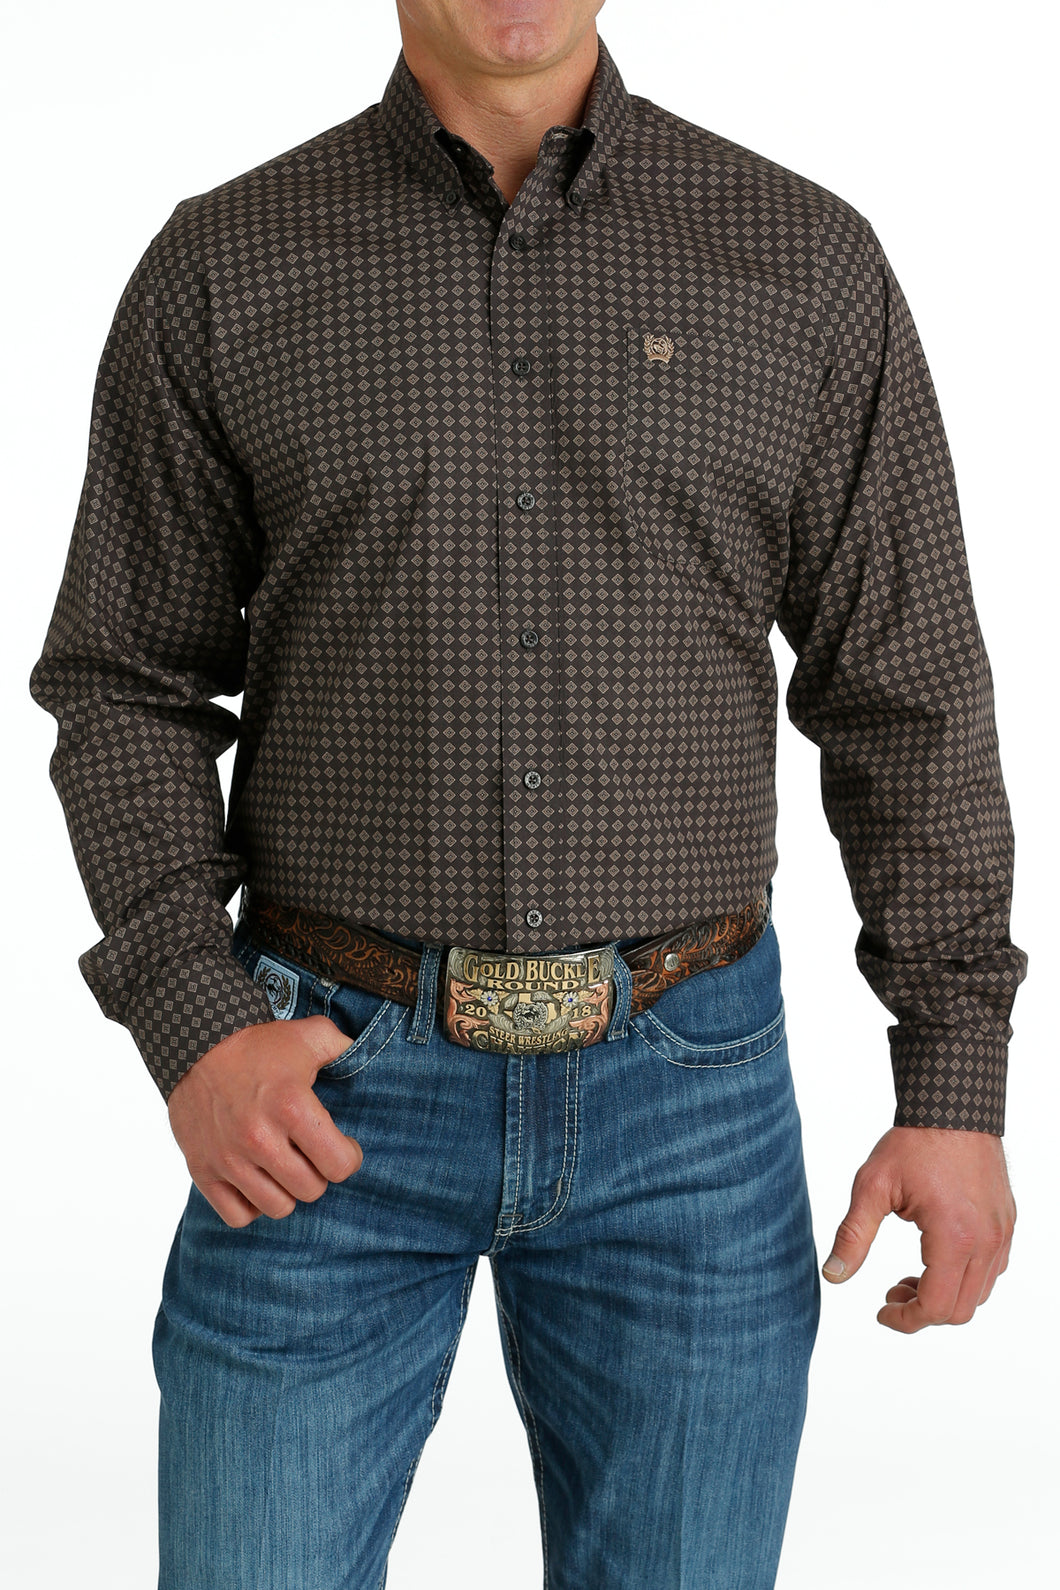 Pard's Western Shop Men's Cinch Brown Diamond Print Button-Down Shirt